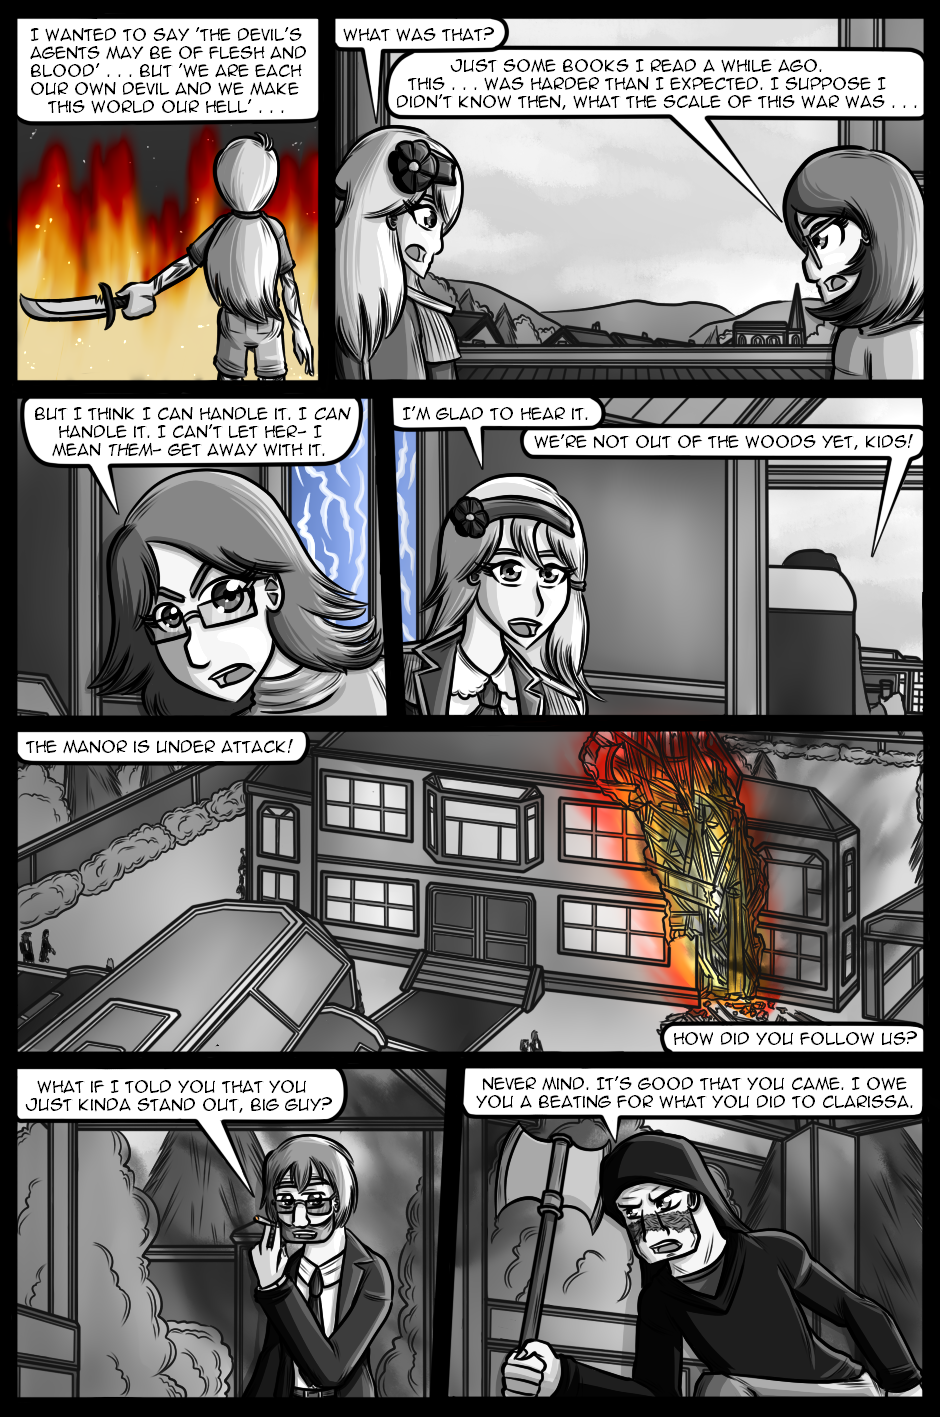 Fire Suppression, Part 46